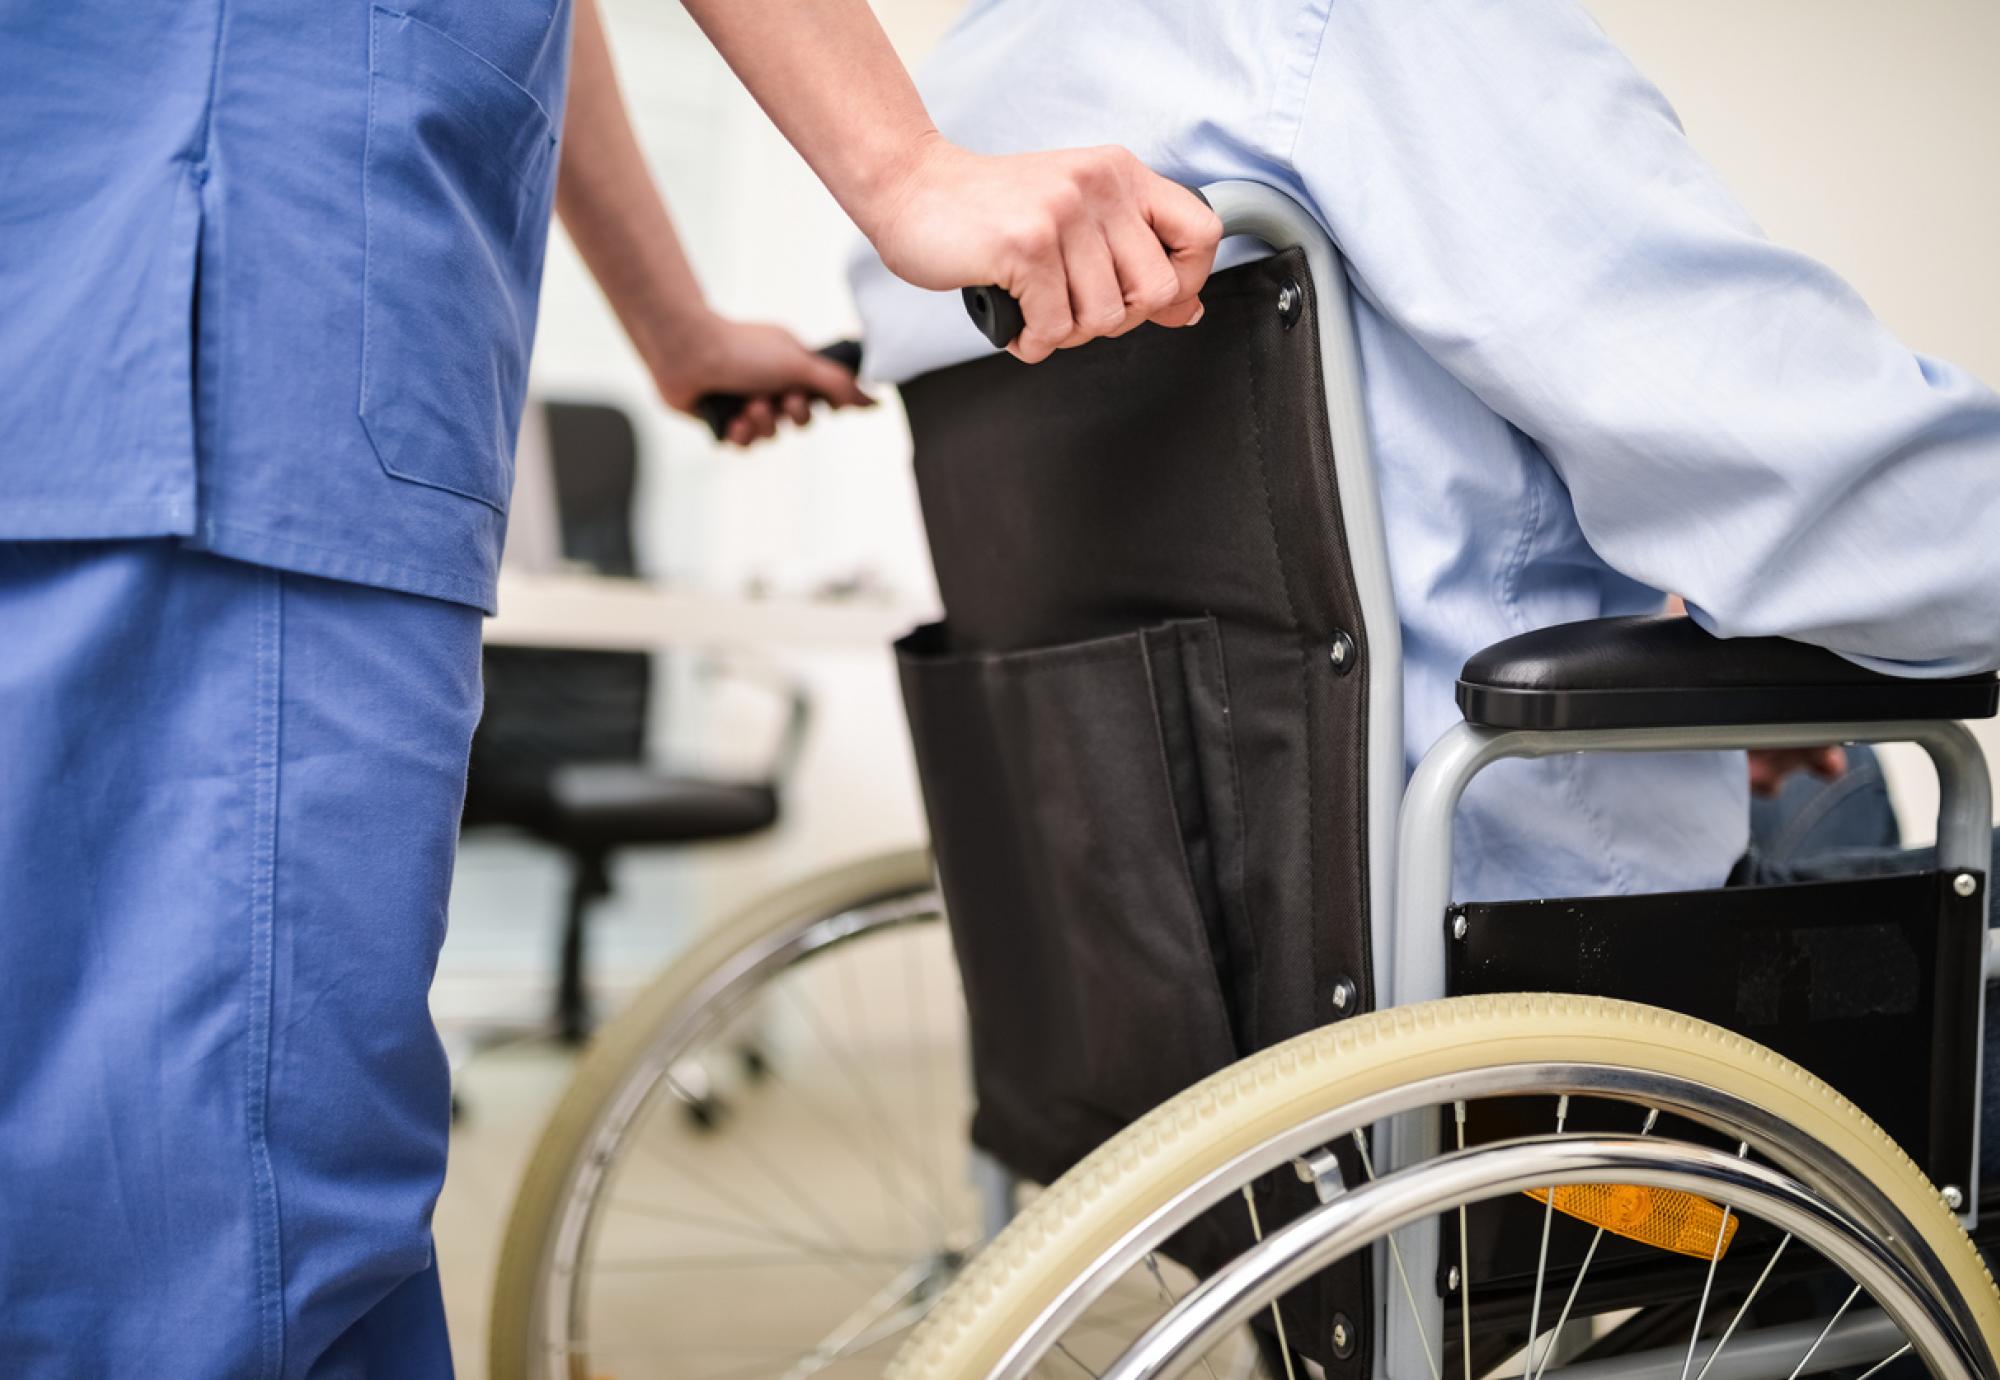 Nurse wheeling an elderly patient into hospital depicting a hospital admission